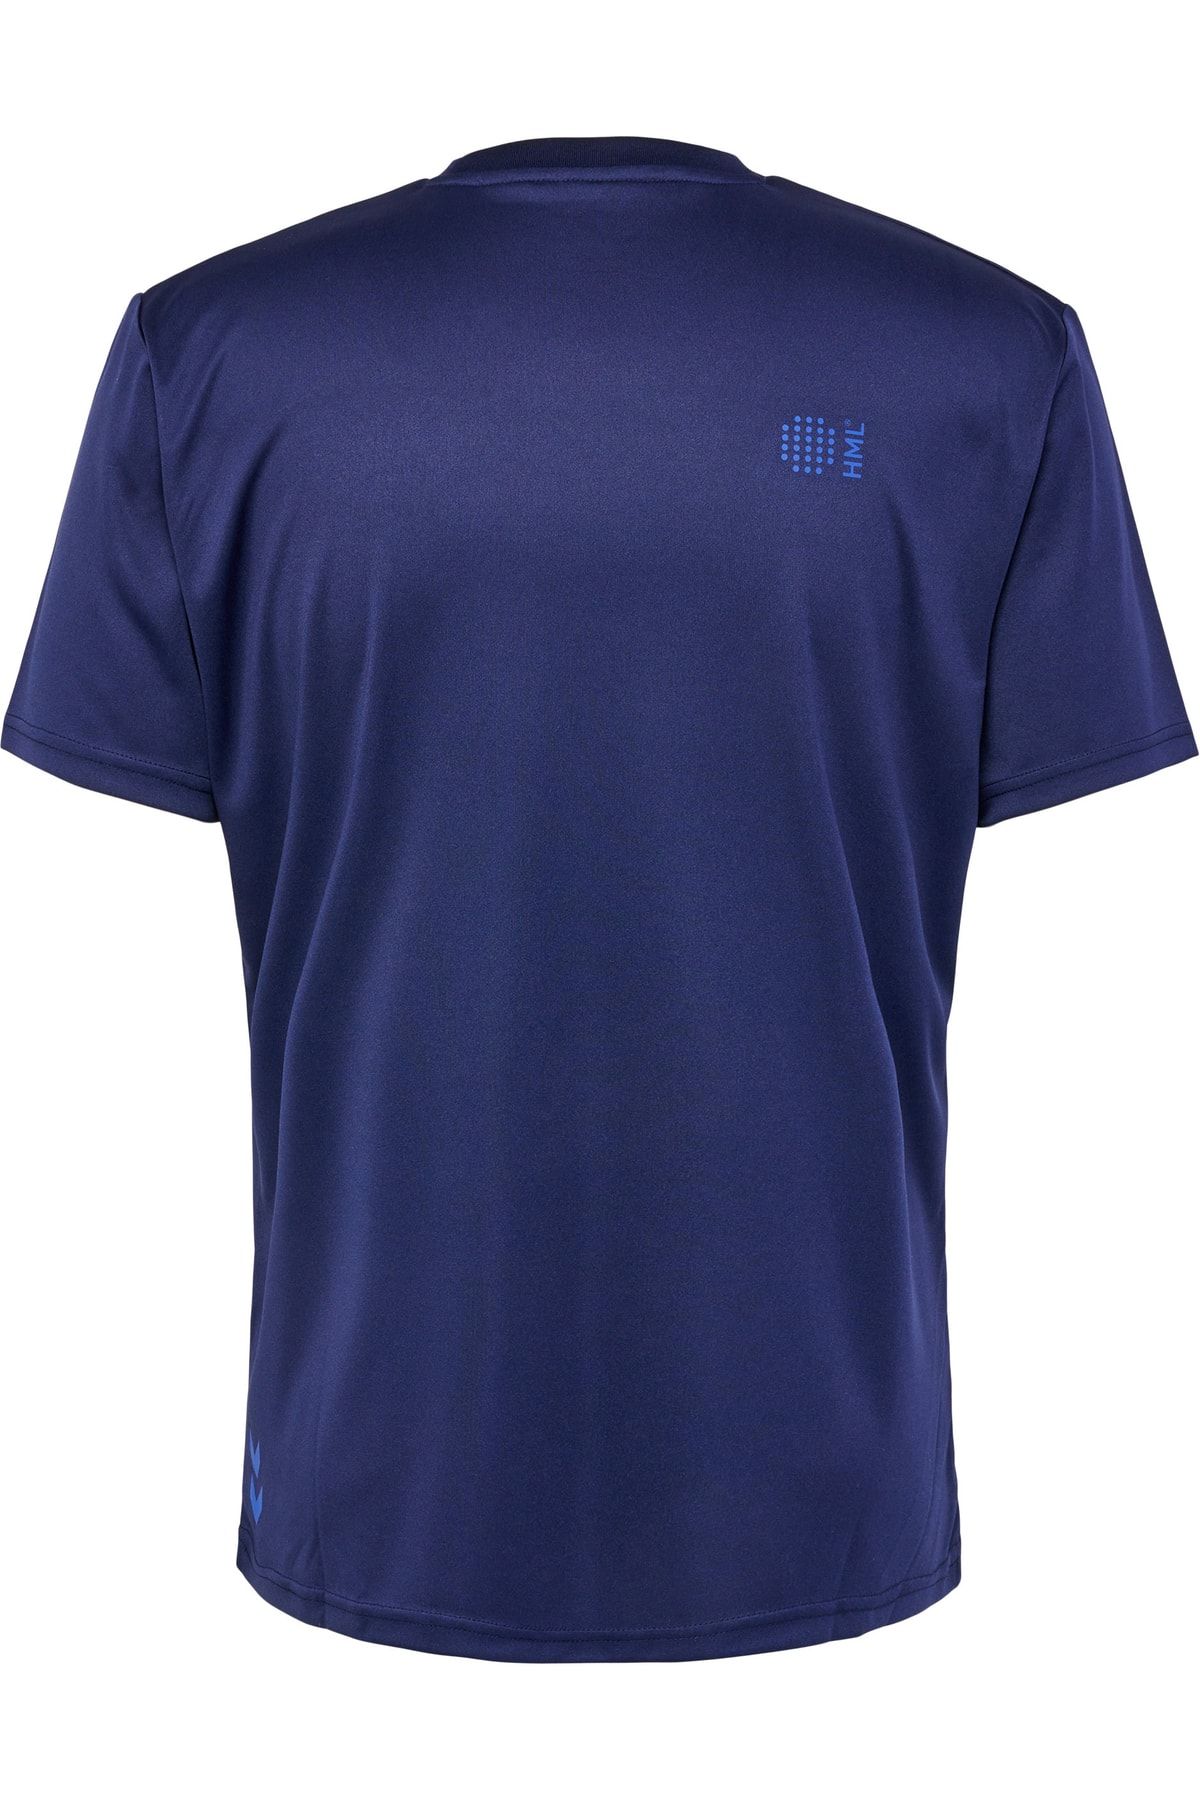 HUMMEL T-Shirt - Regular - Fit Trendyol Blau 